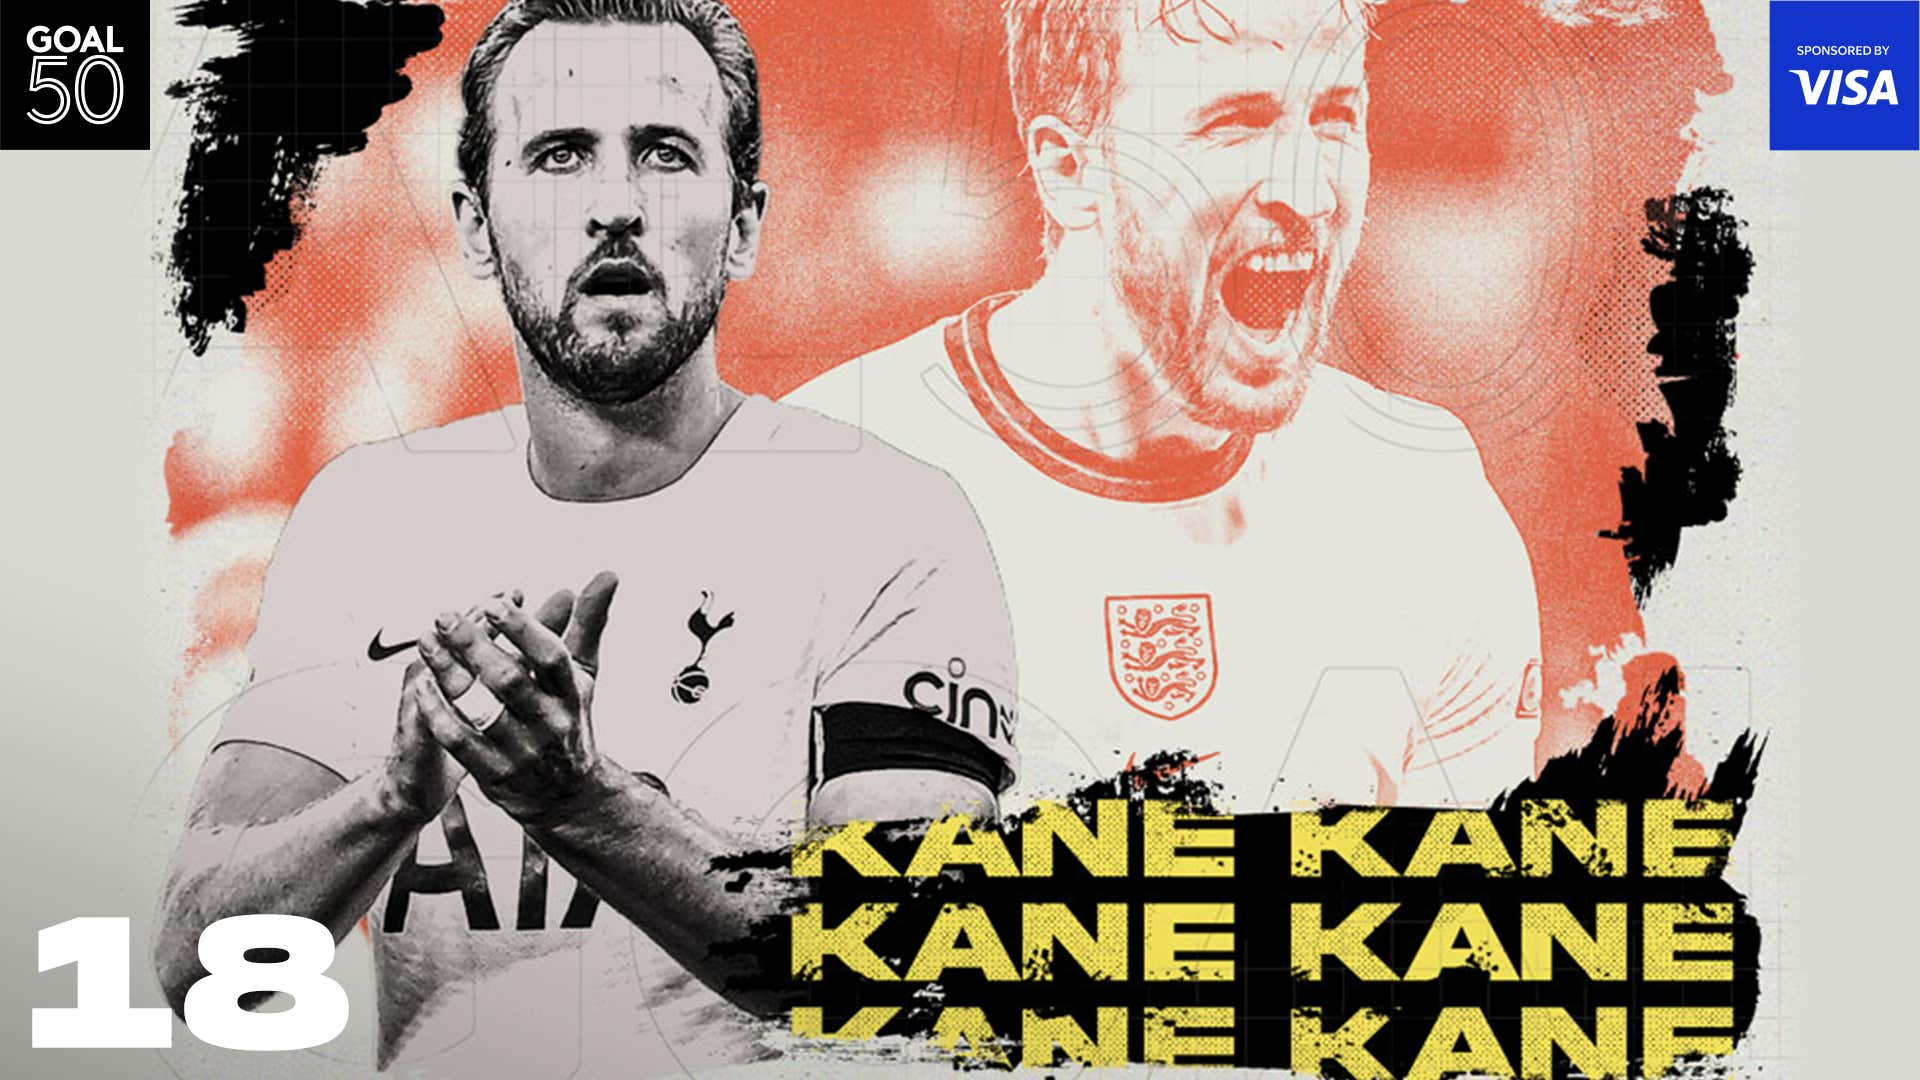 Kane Goal50 2021